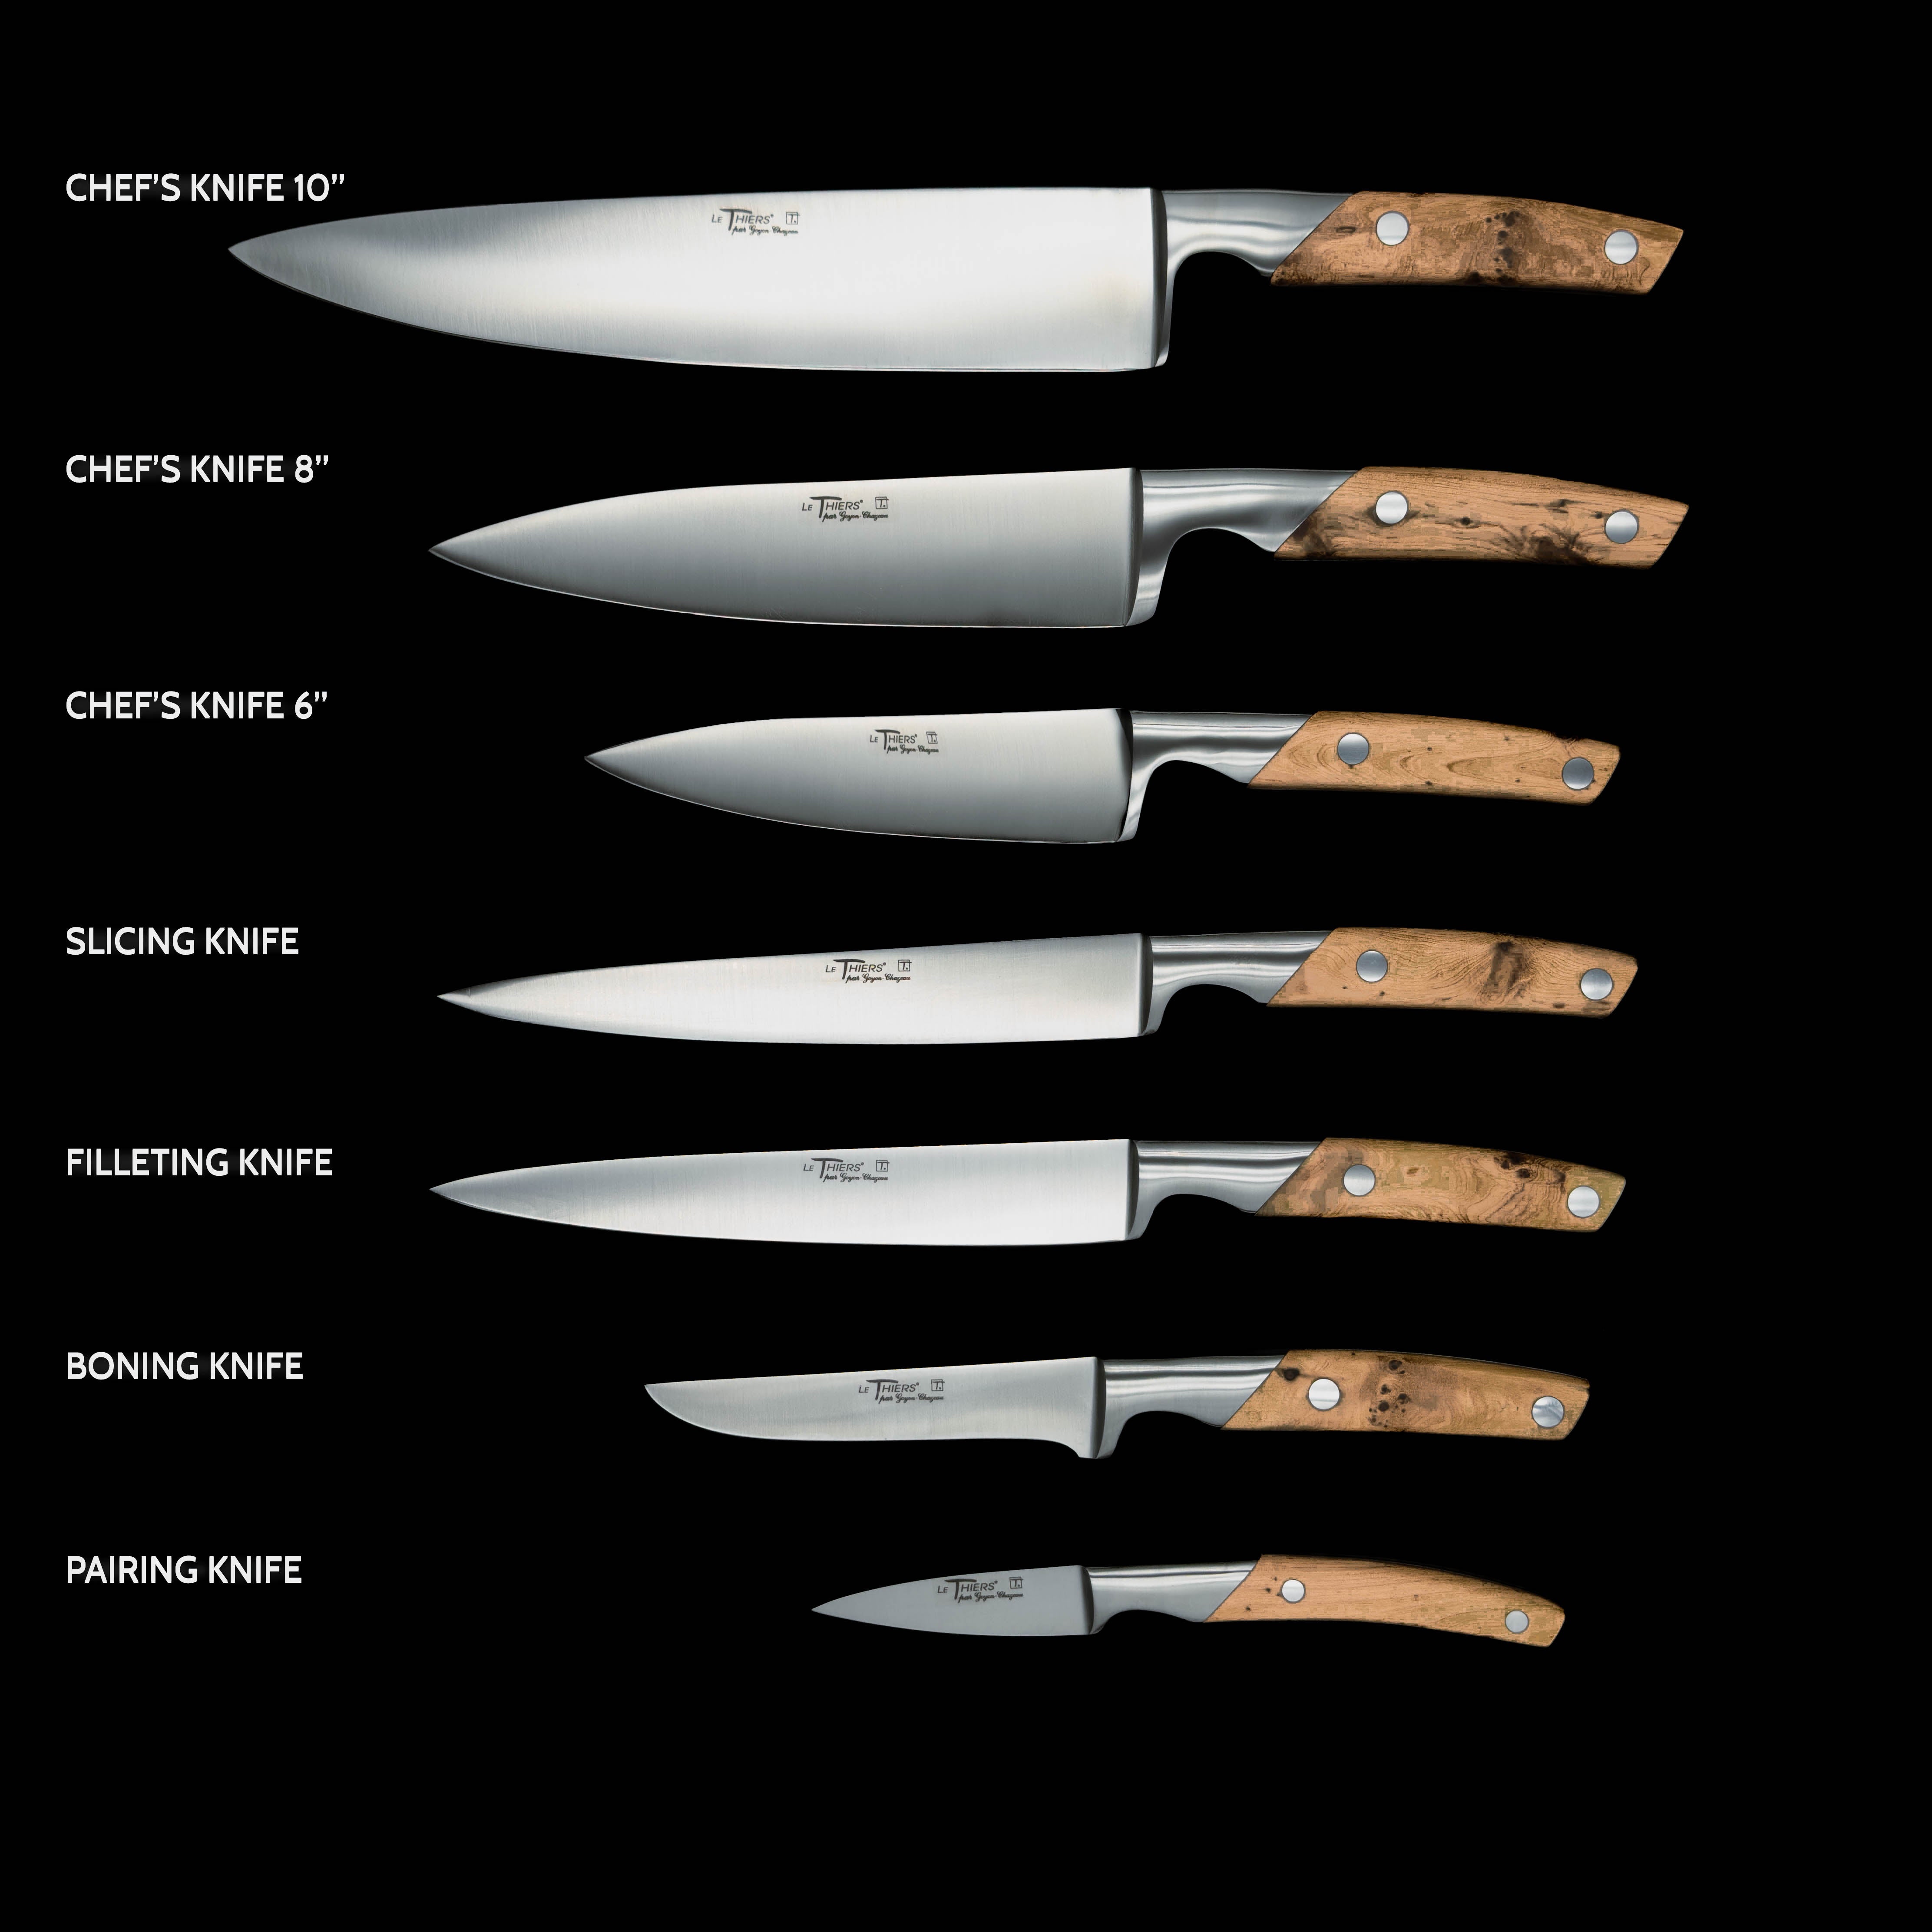 Goyon-Chazeau all knives aligned for size comparison